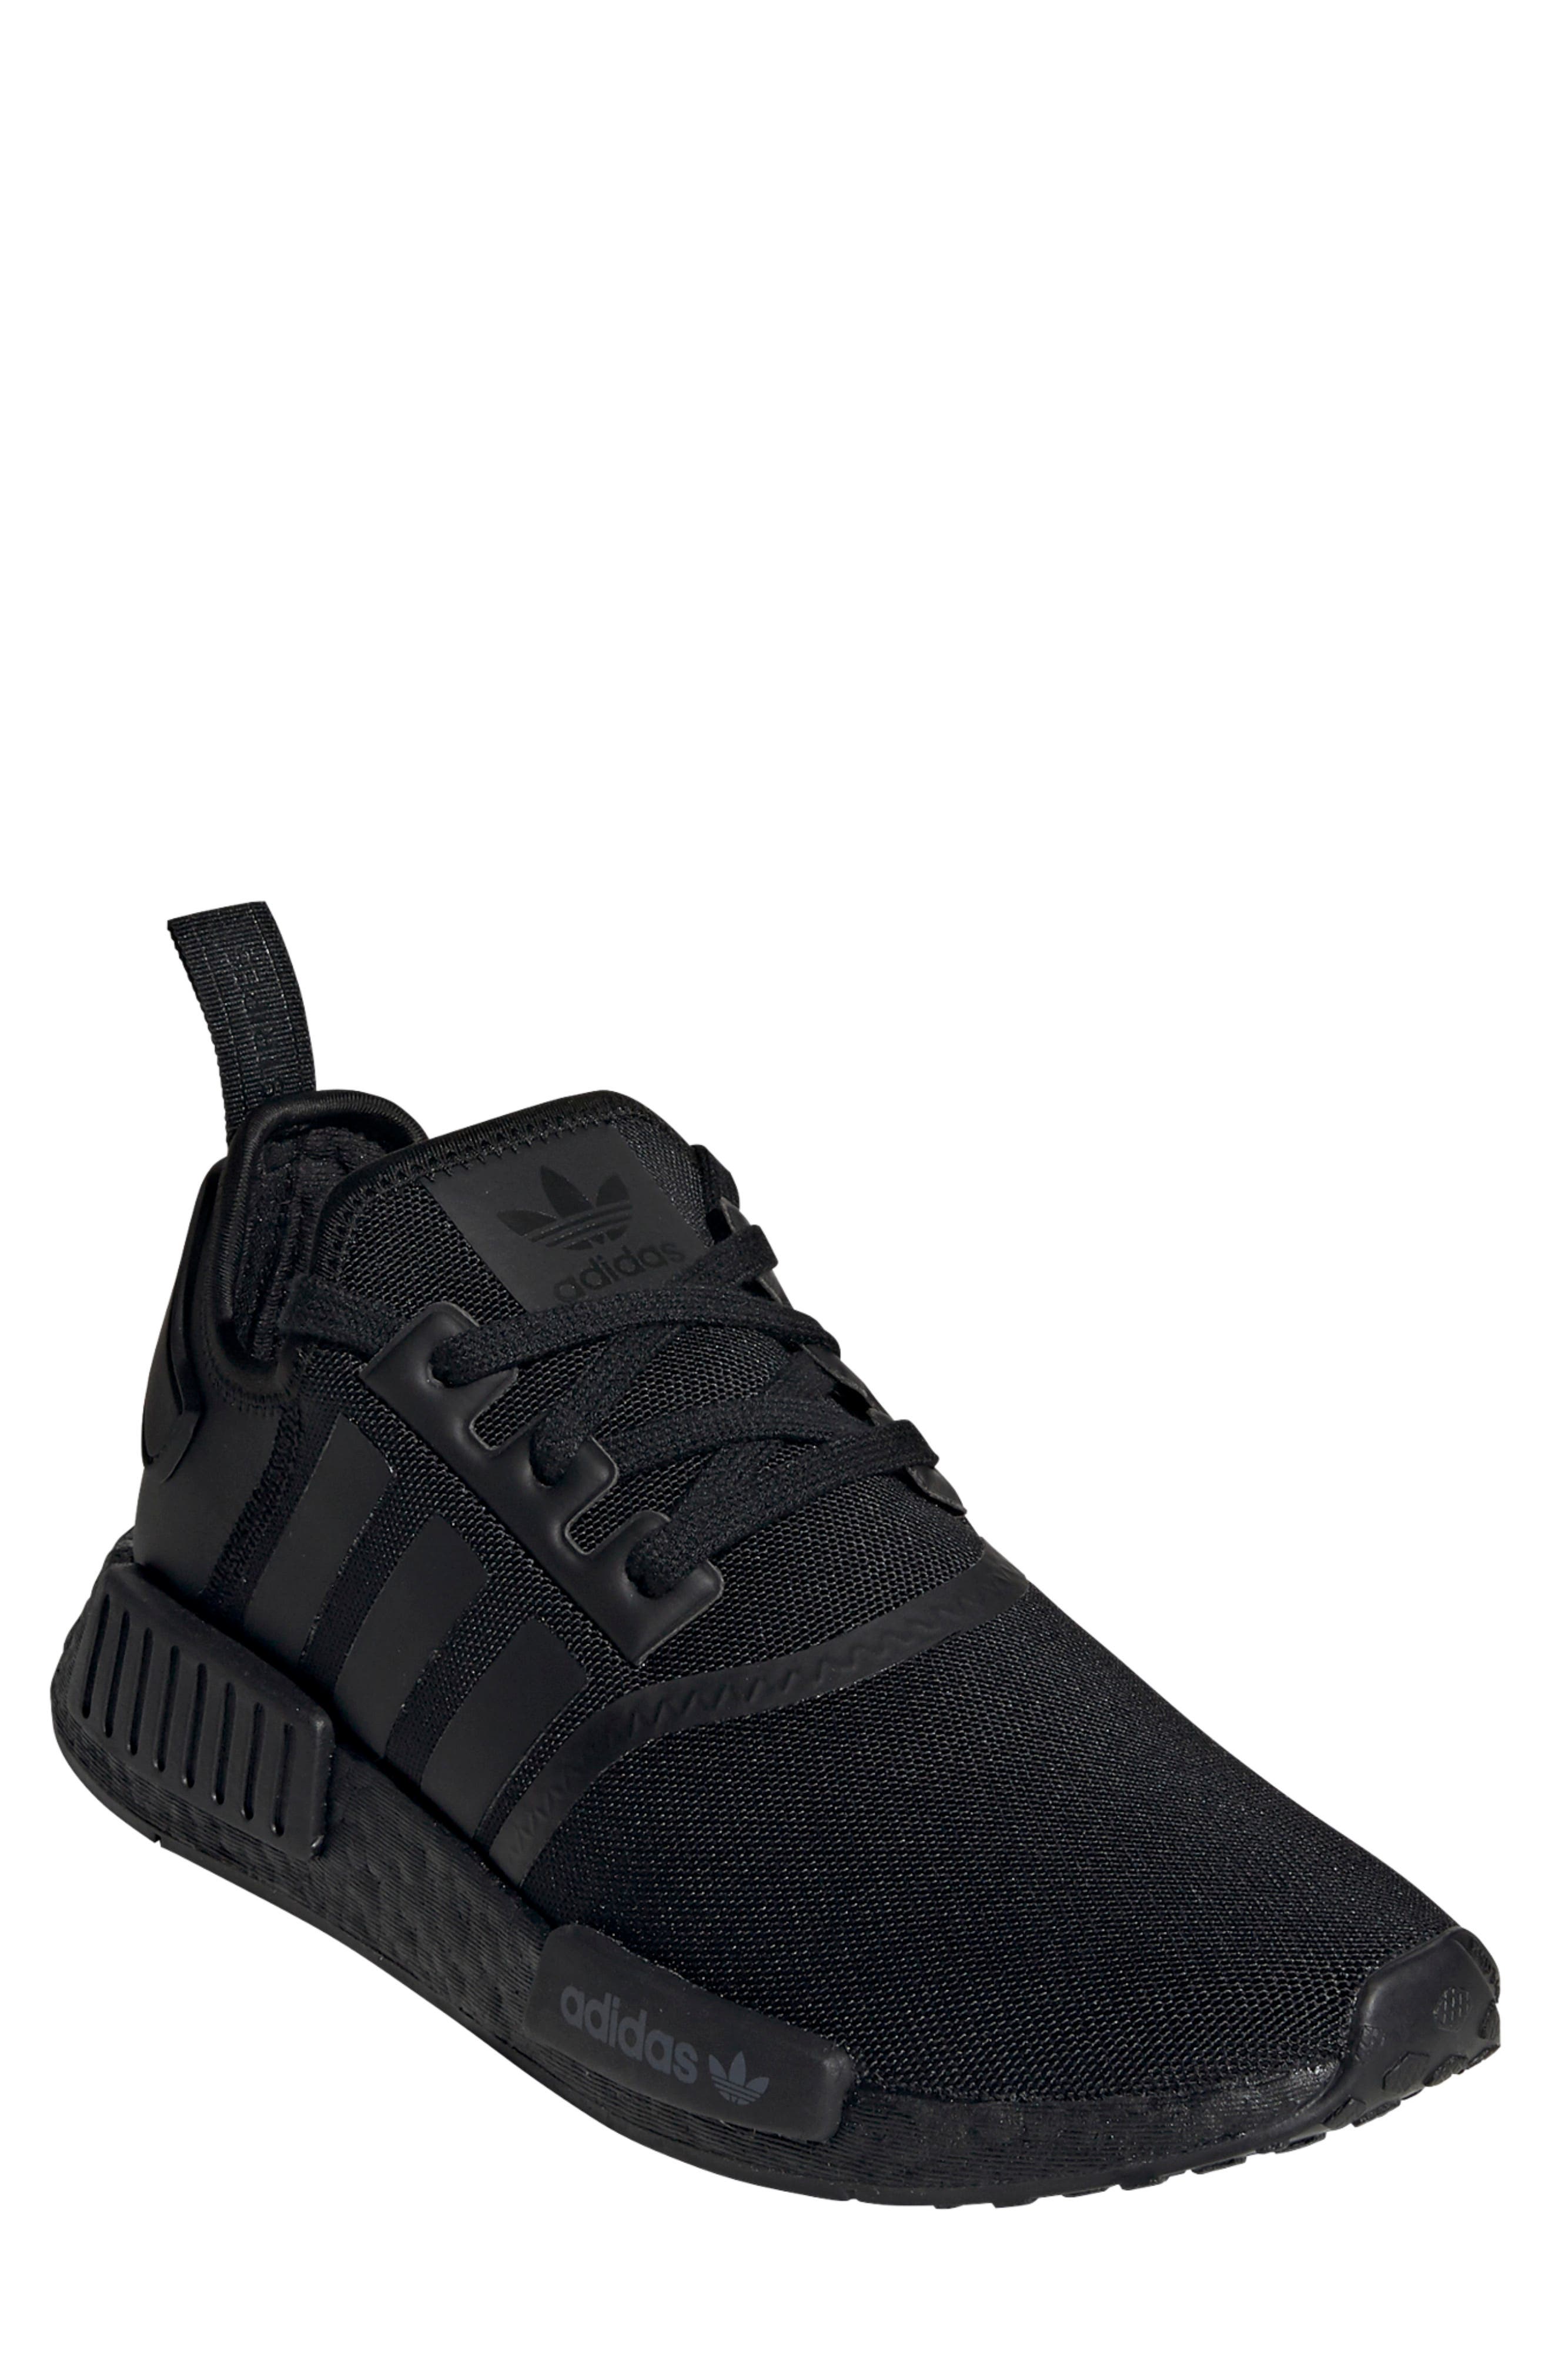 nmd r1 shoes black